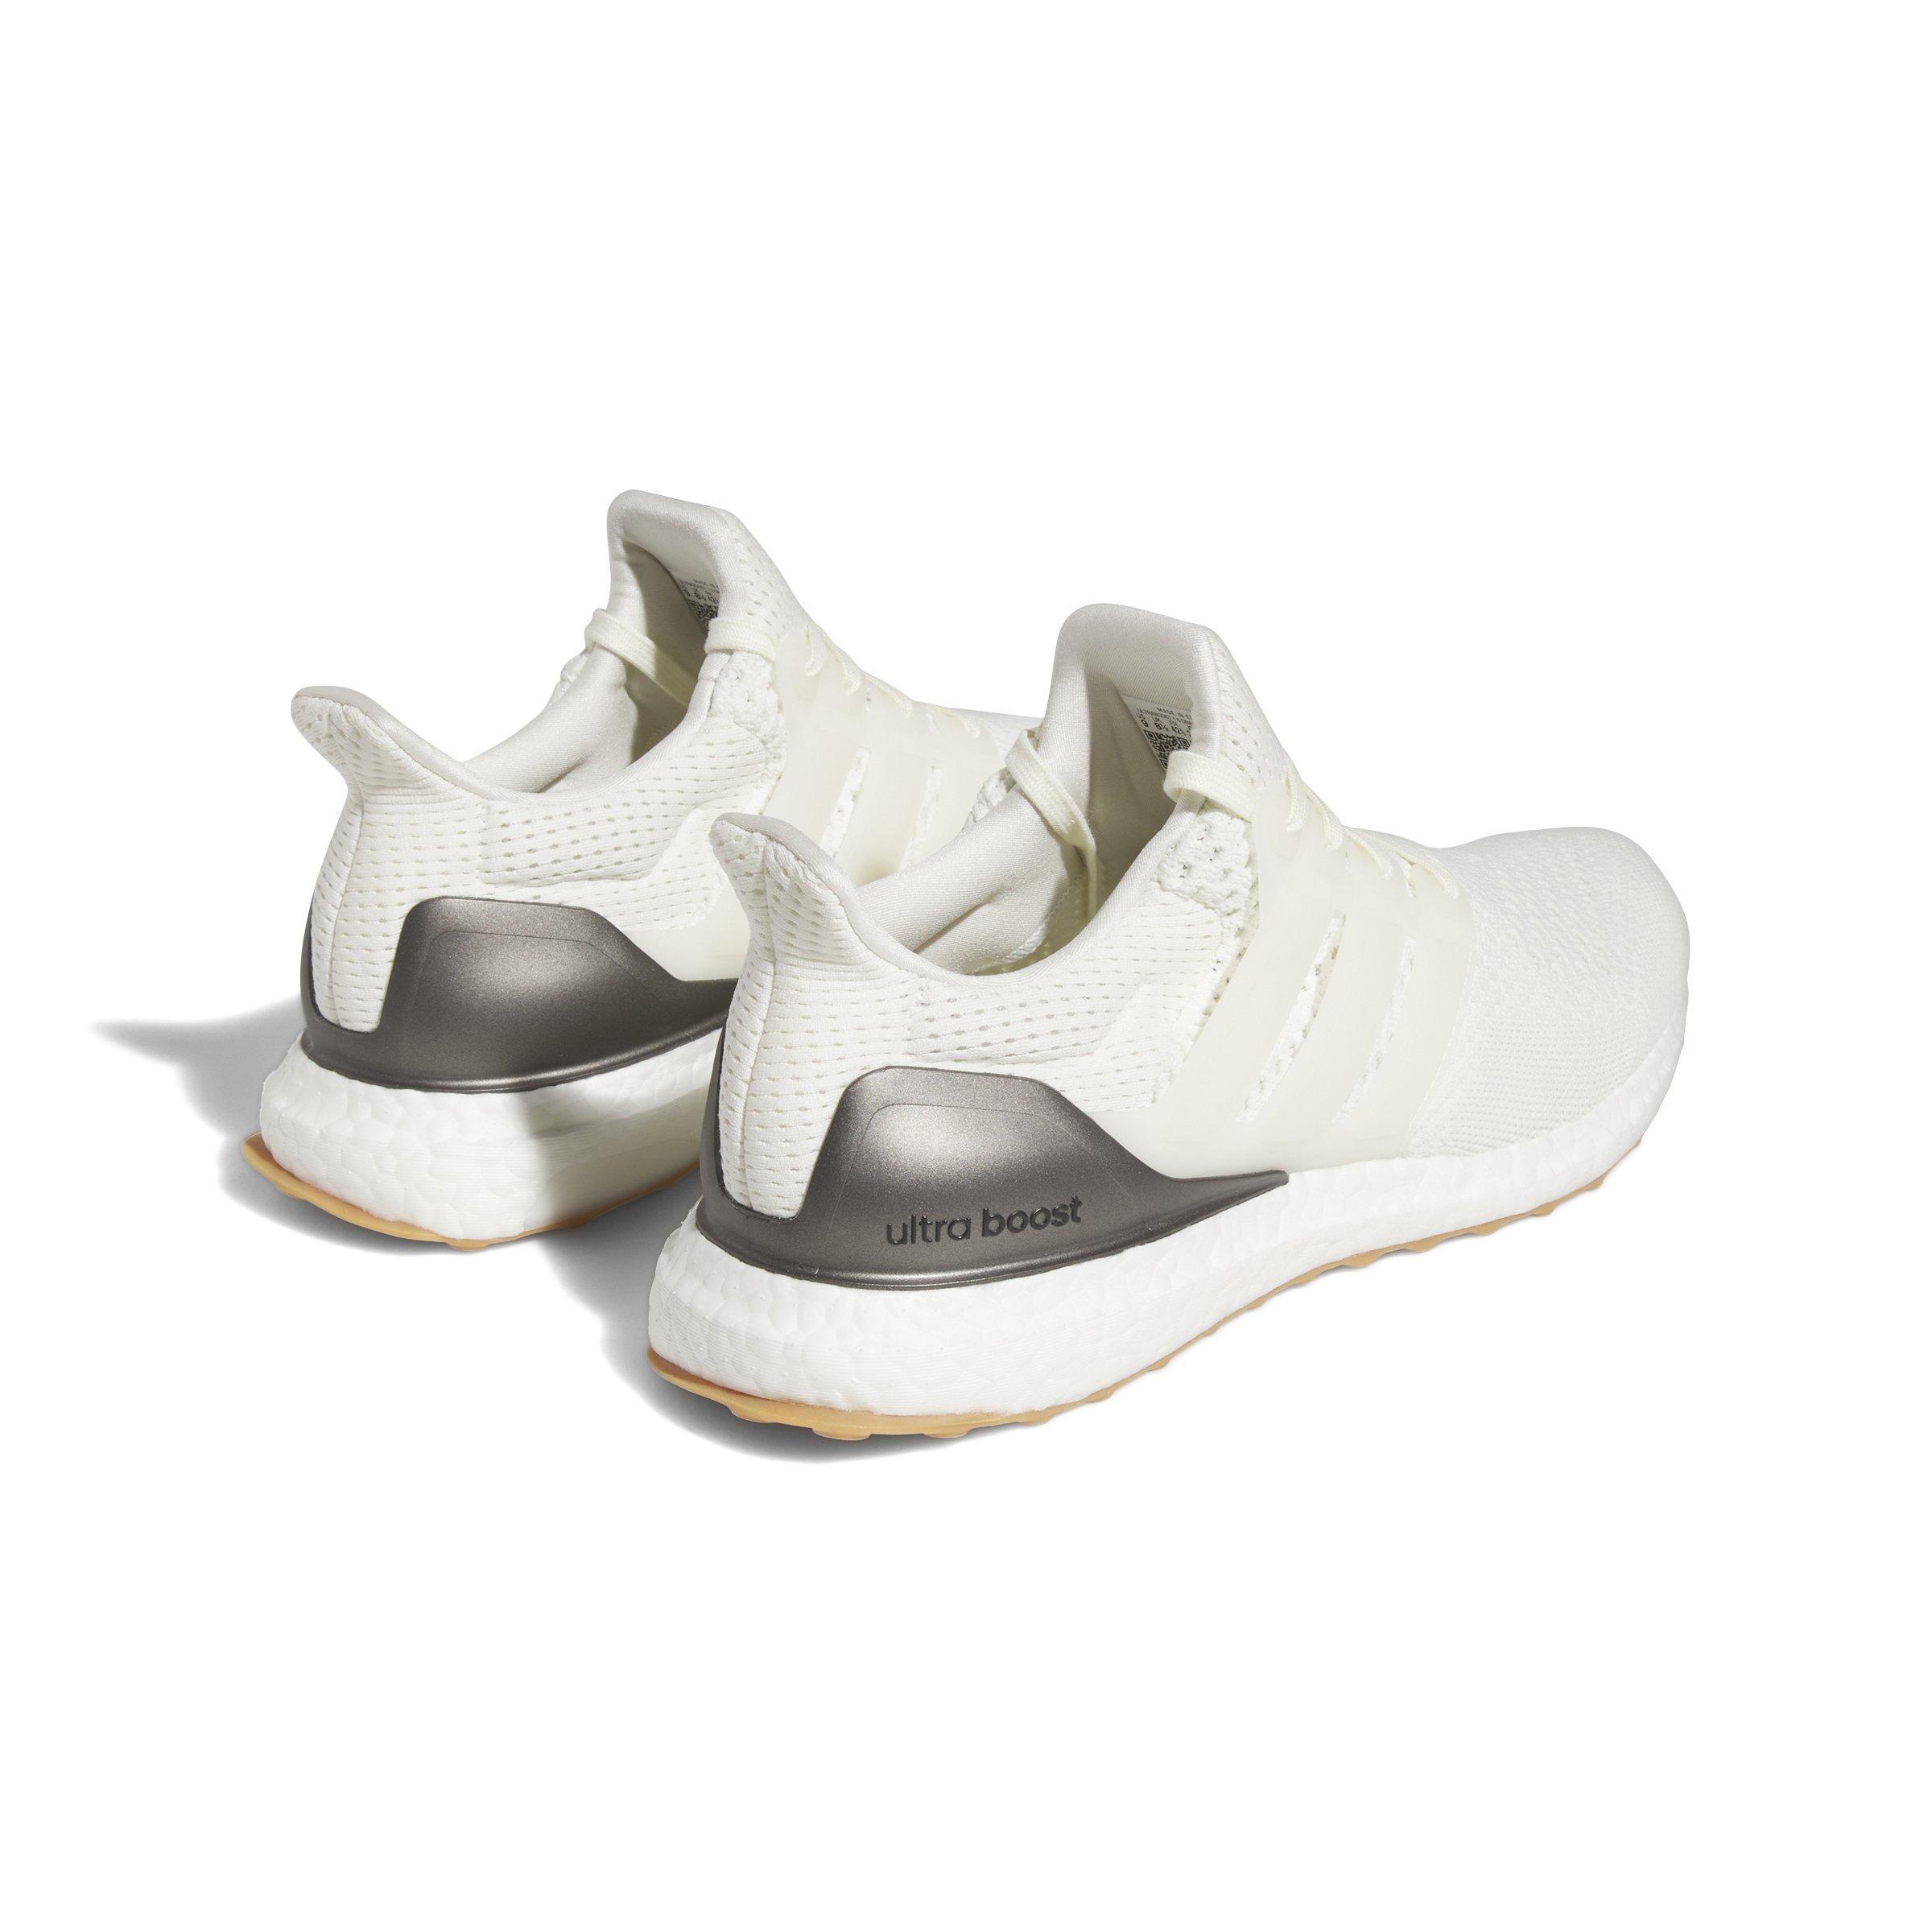 adidas Ultraboost 1.0 FoC "Off White/Core Black" Men's Running Shoe